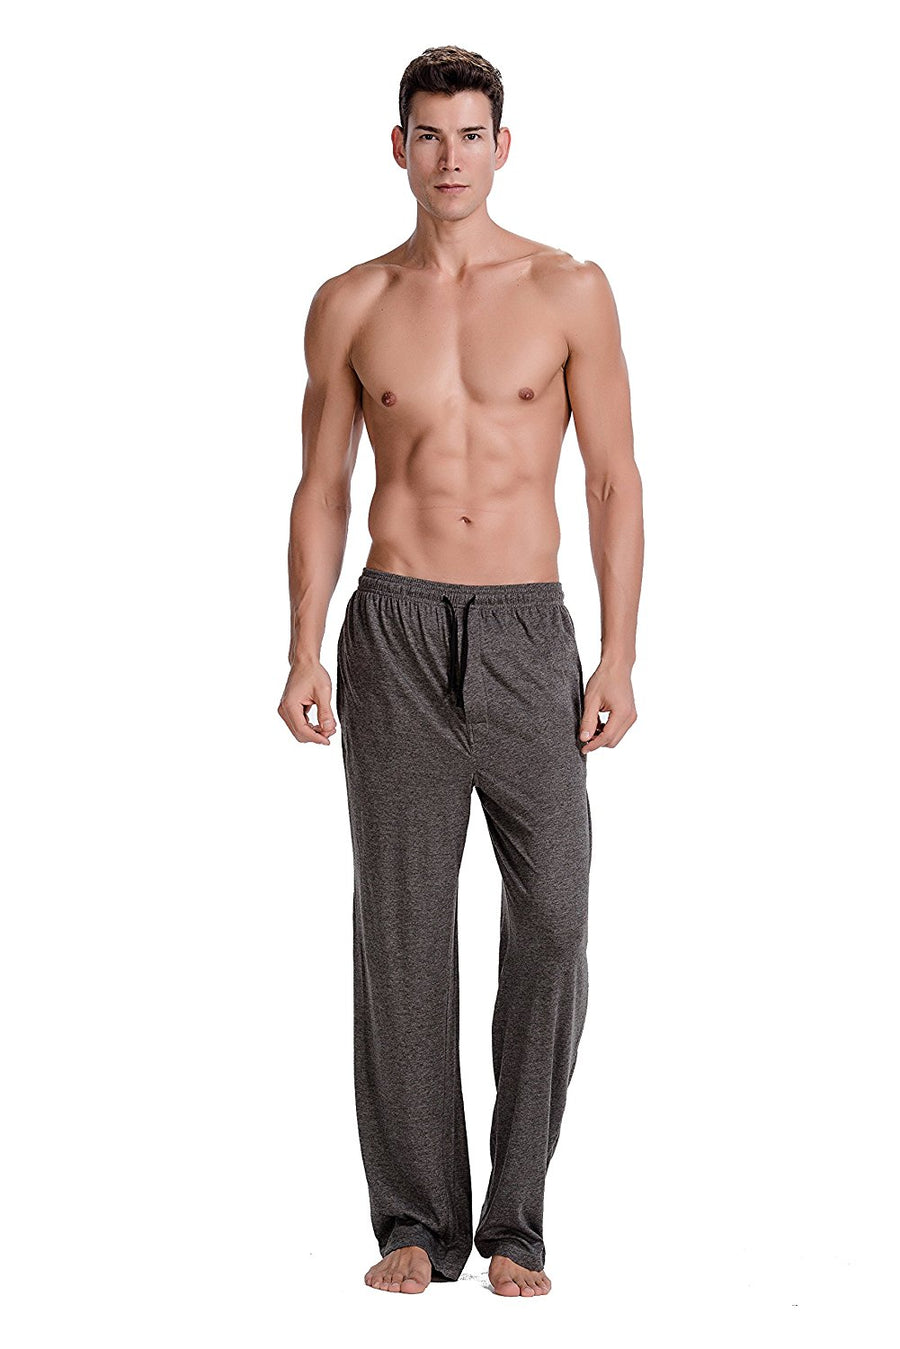 CYZ Mens 100% Cotton Pajama Pants Sleep Lounge Pajamas for Men